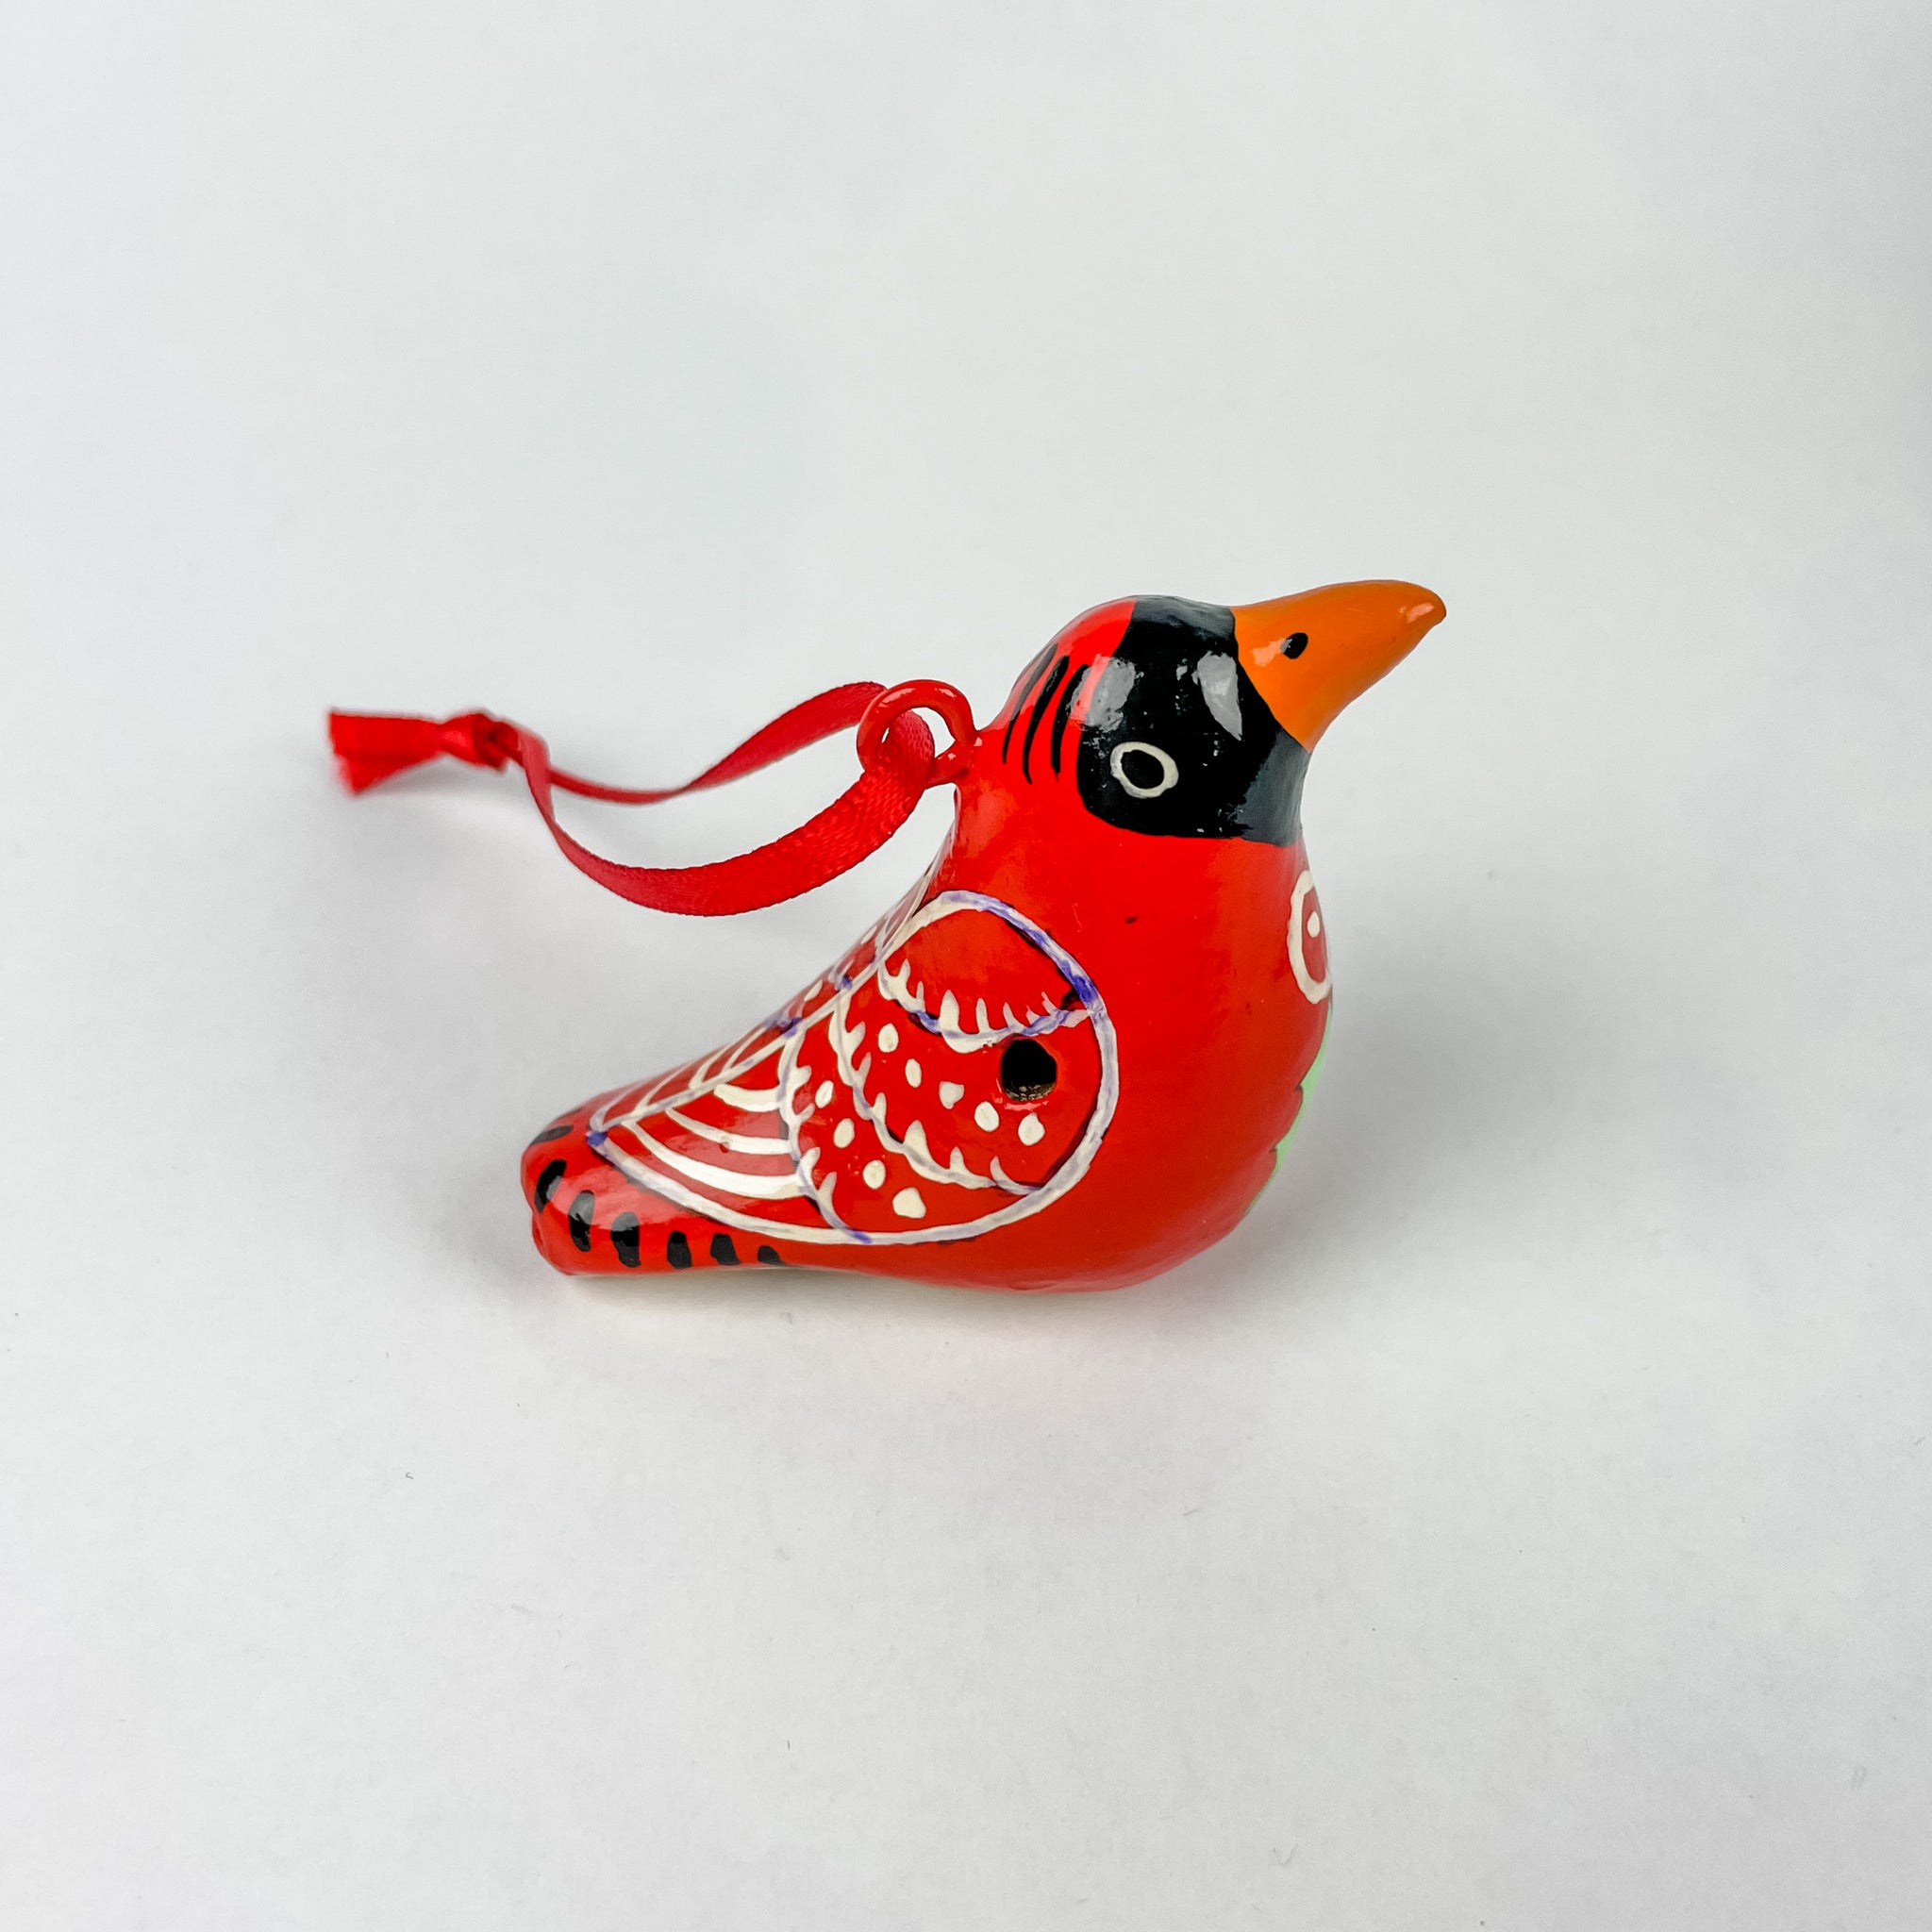 Mini Cardinal Whistle Ornament